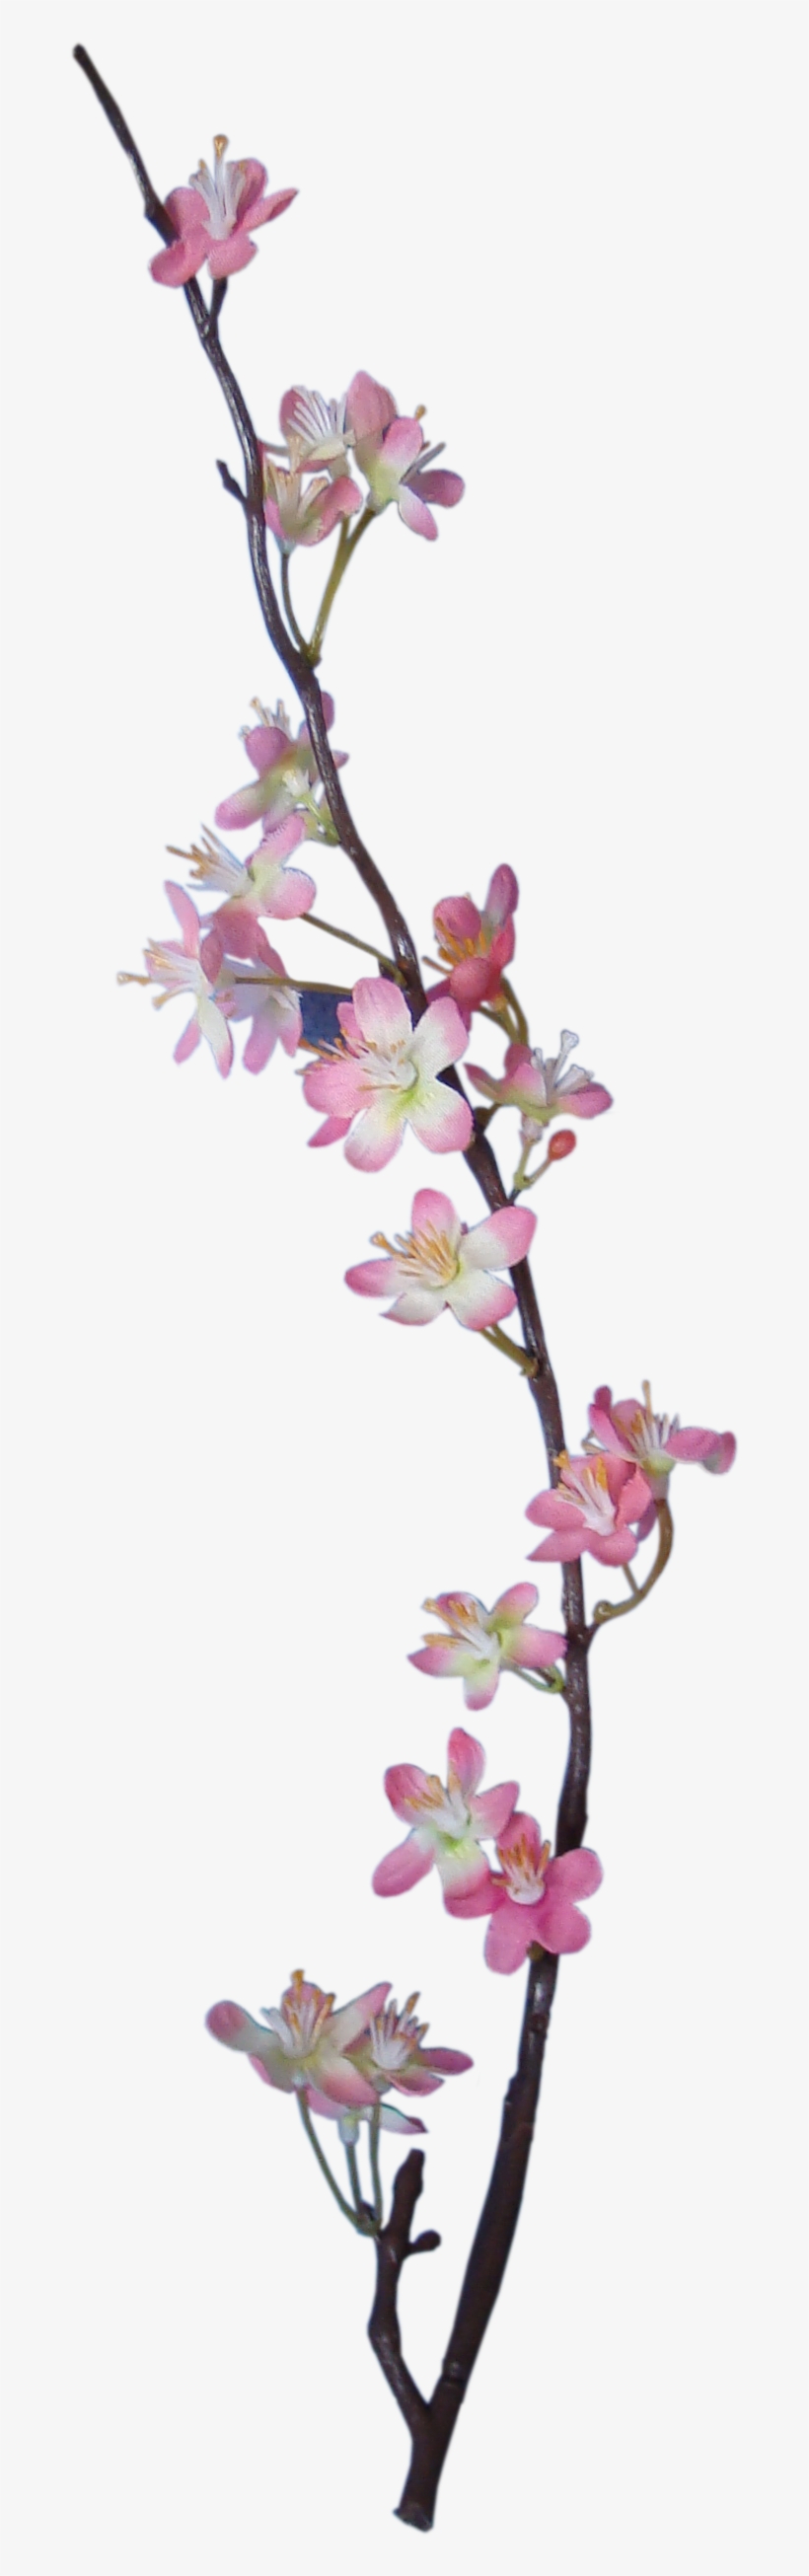 Apple Blossom - Apple Blossom Png, transparent png #3229826